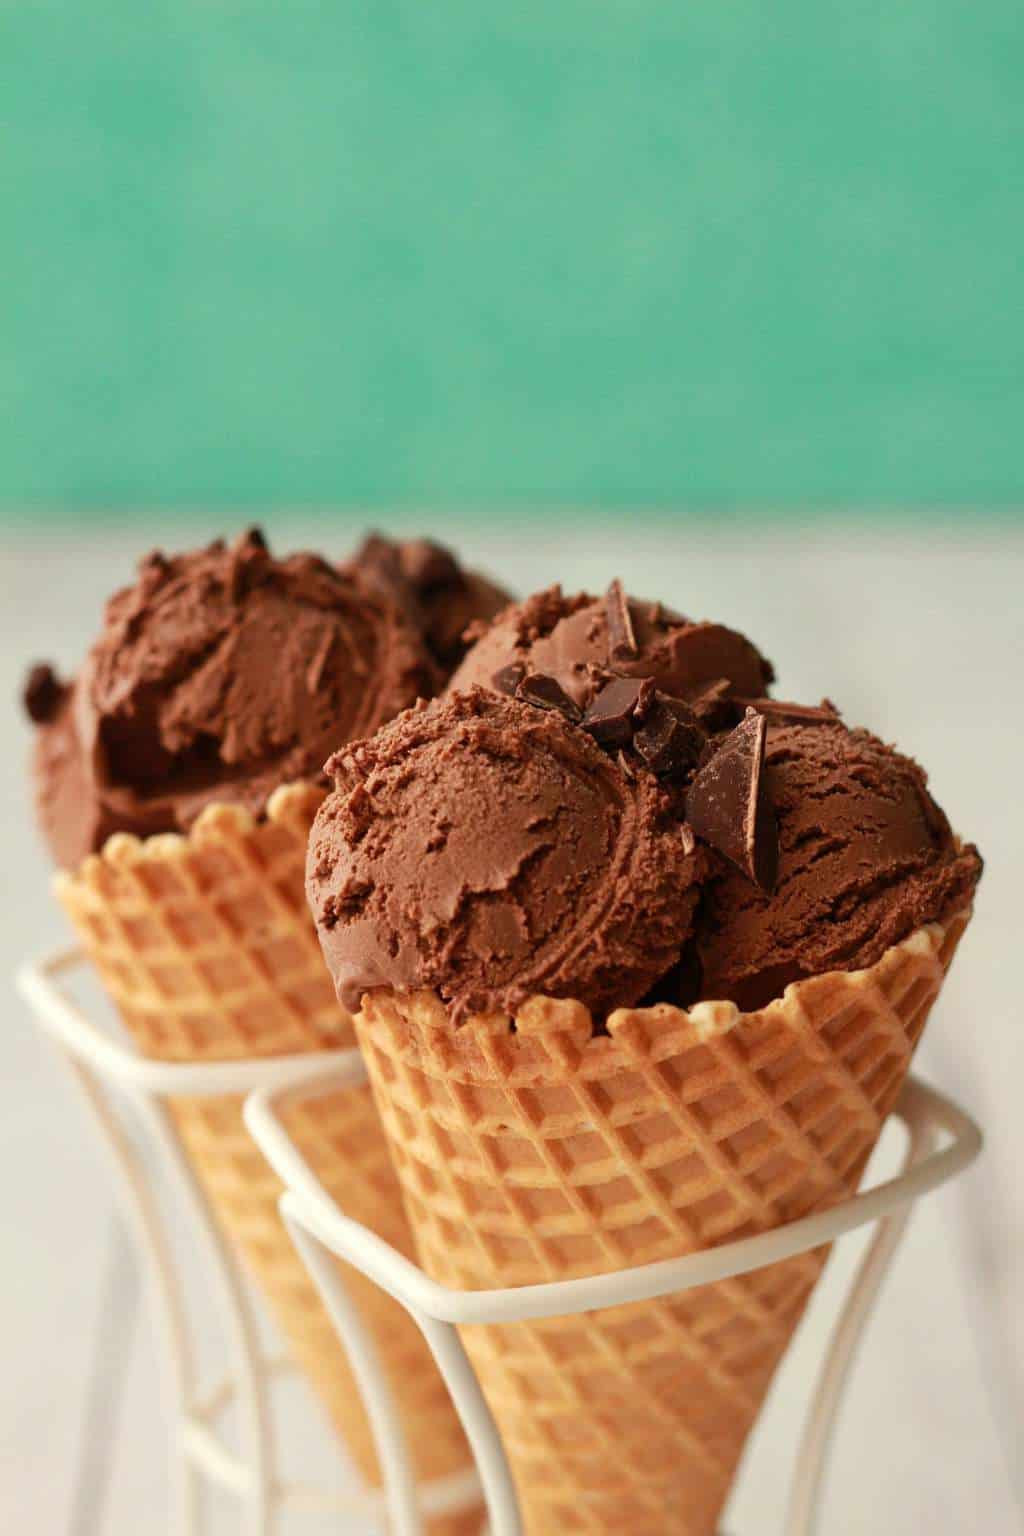 Vegan Chocolate Ice Cream Recipes
 The Most Decadent Vegan Chocolate Ice Cream Loving It Vegan